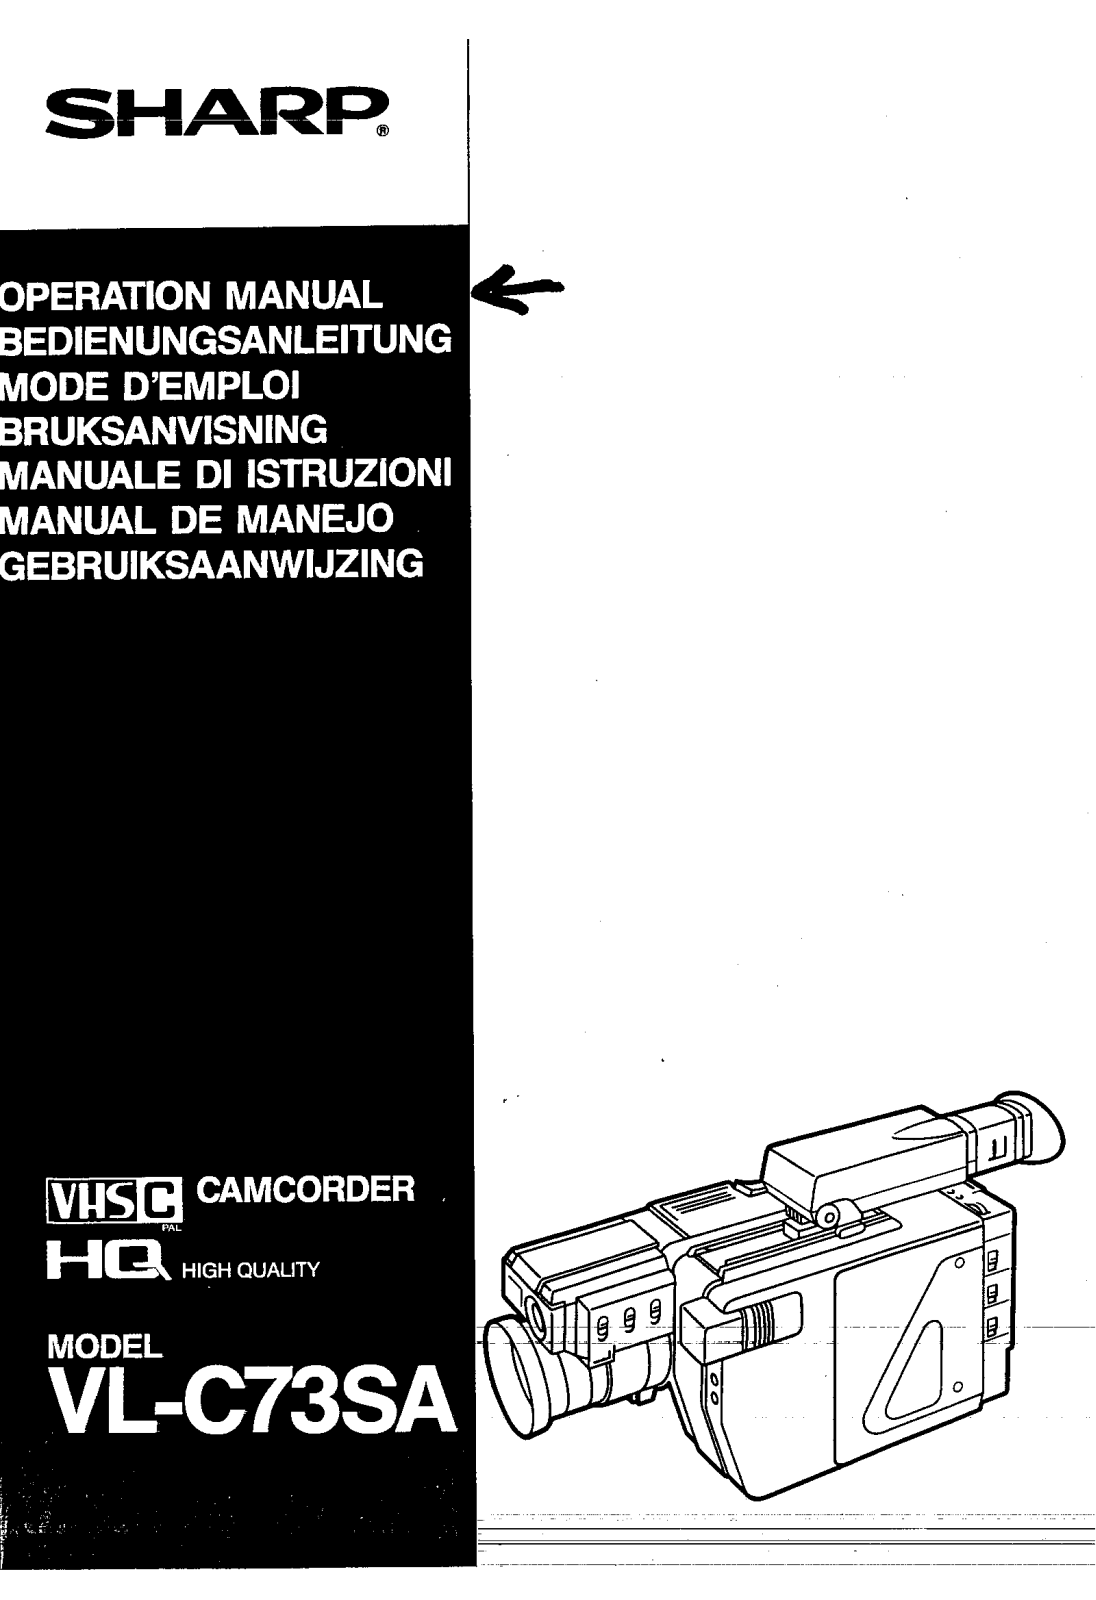 Sharp VC-C73SA Manual